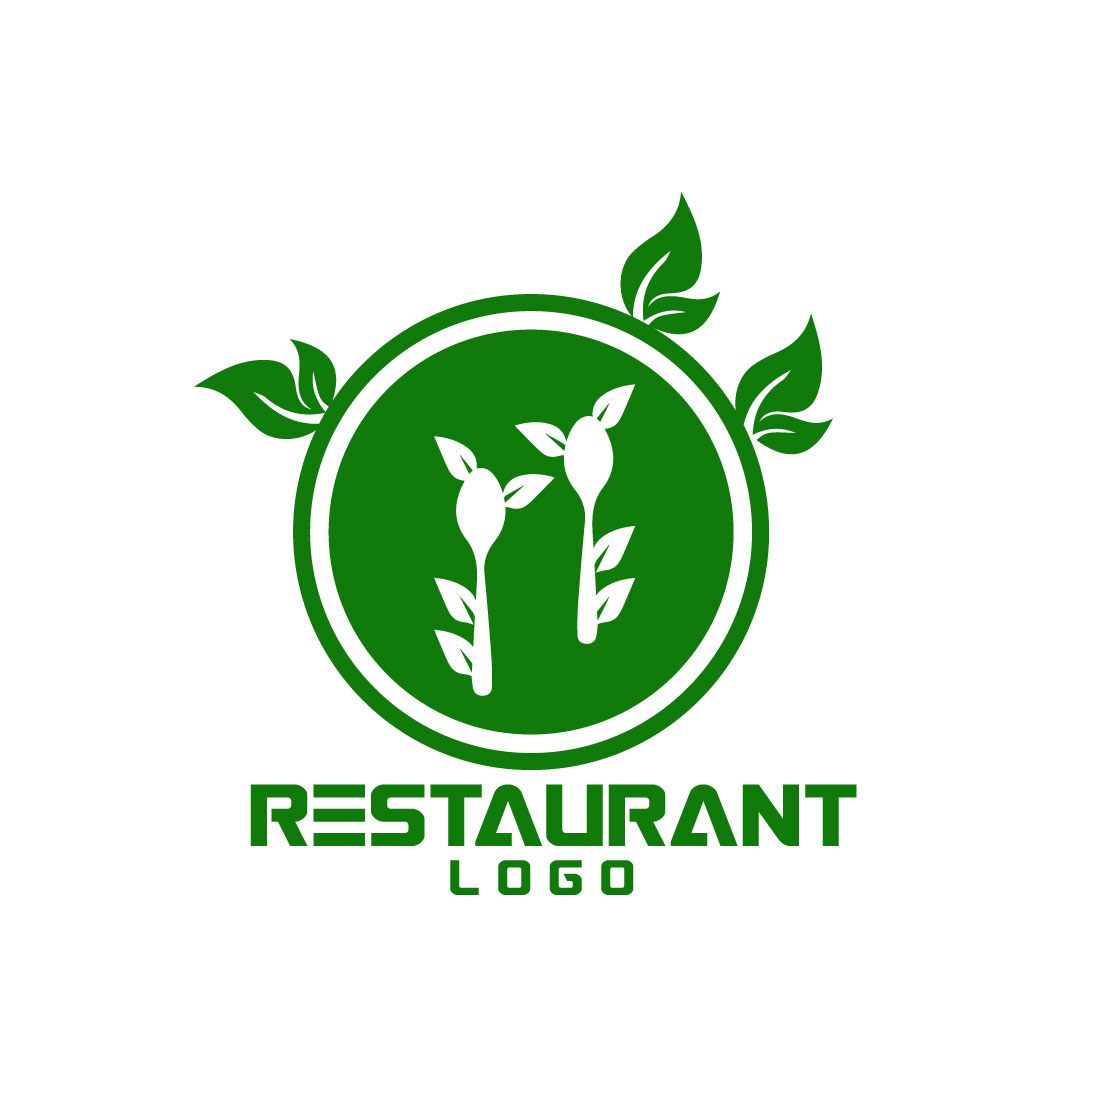 Free Restaurant Logo preview image.